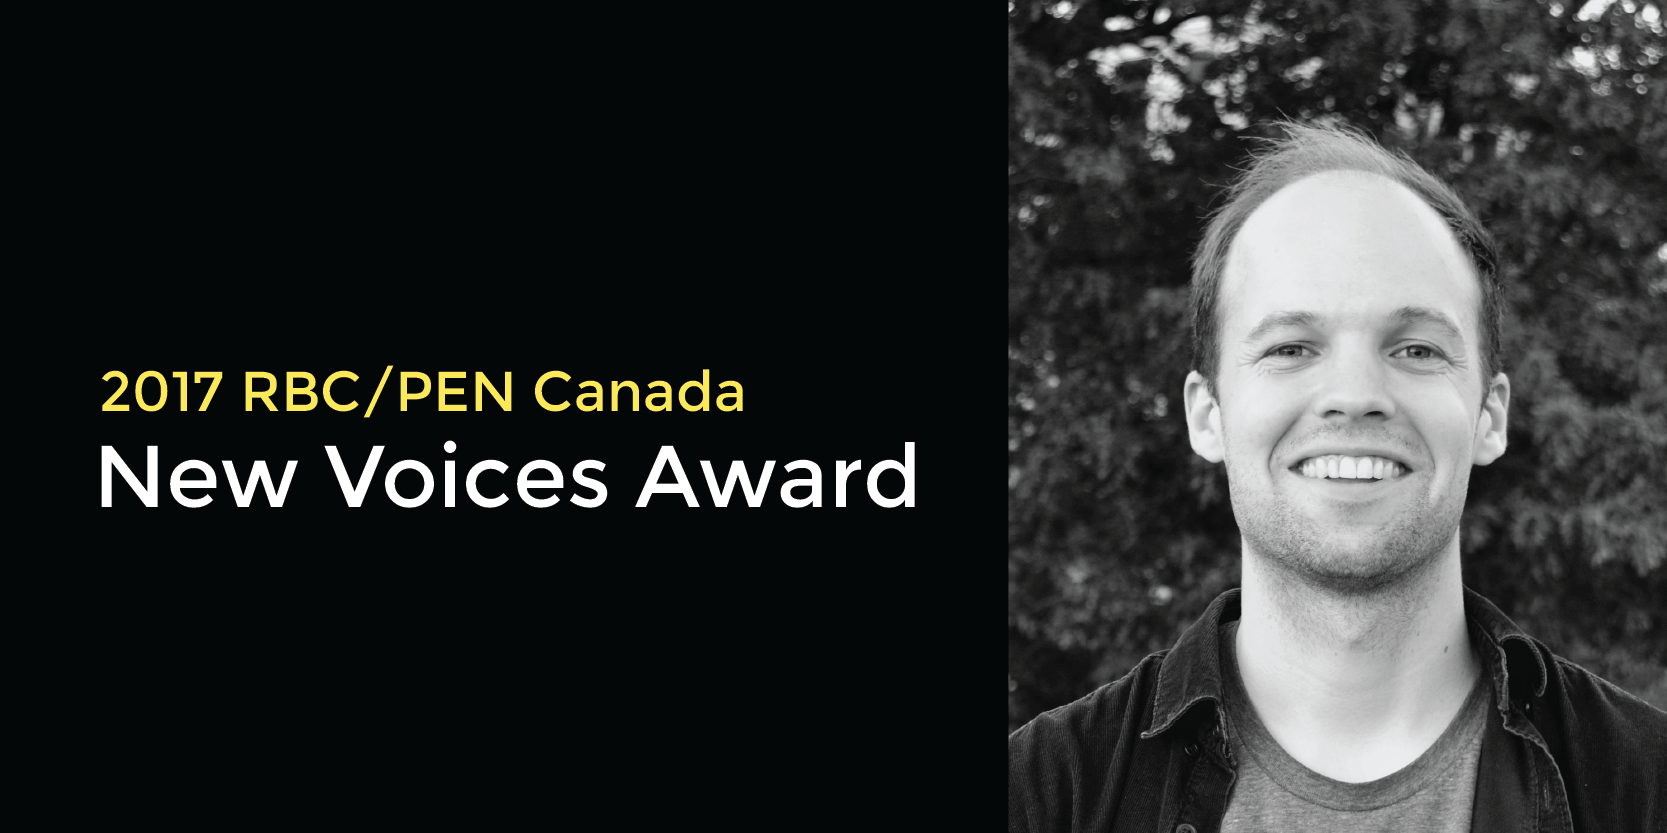 Mikko Harvey, winner of the 2017 RBC/PEN Canada New Voices Award